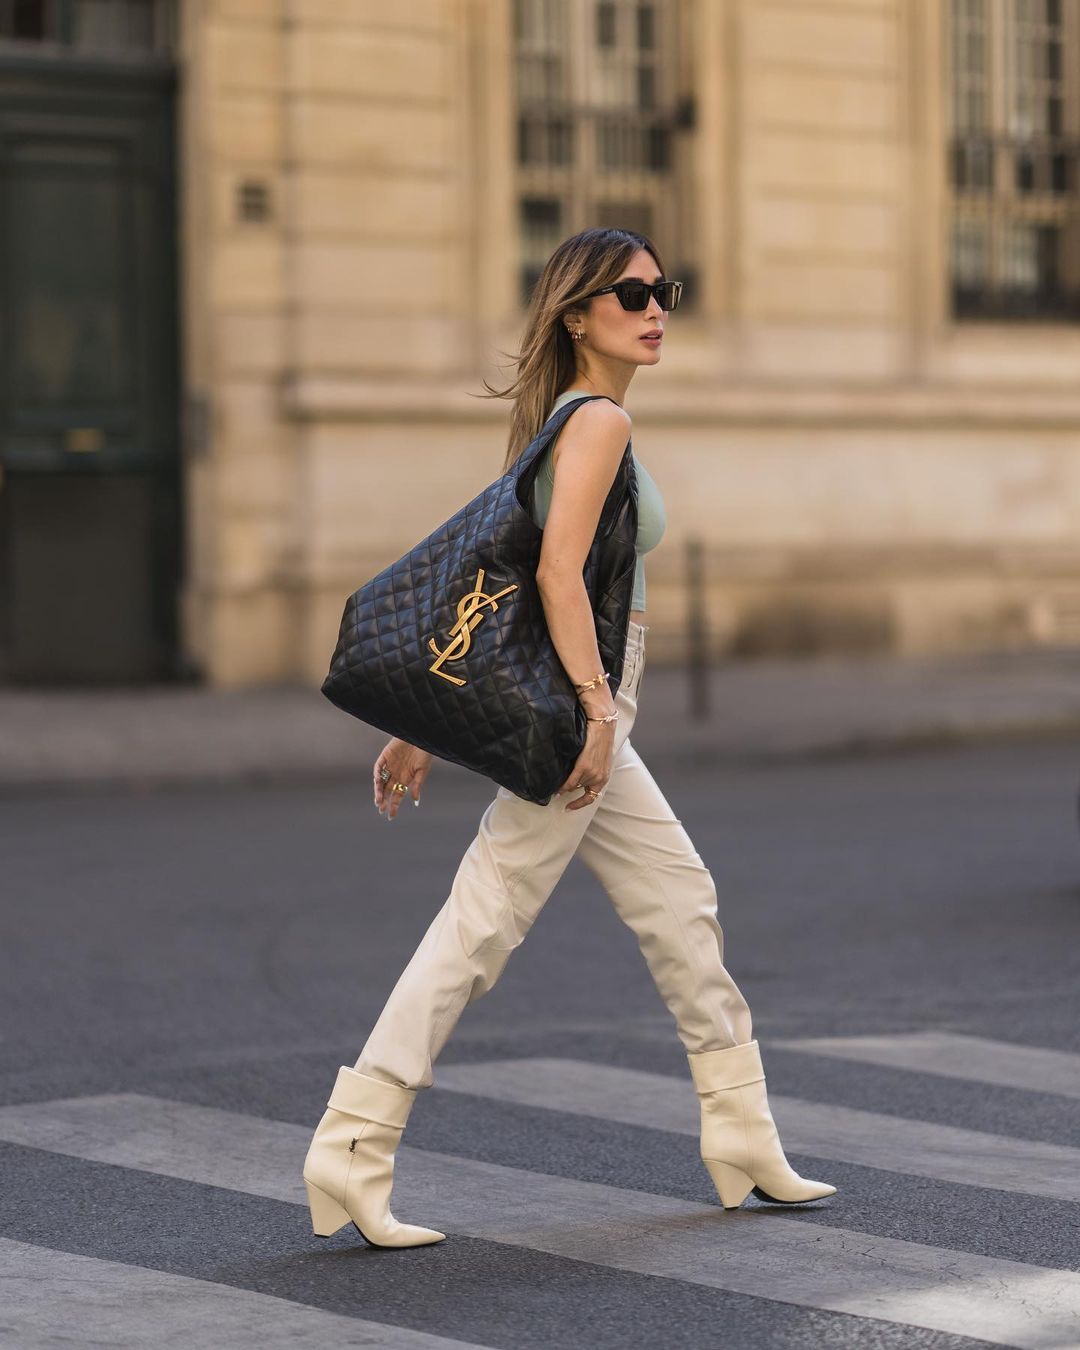 Gabbi Garcia's favorite Louis Vuitton bags